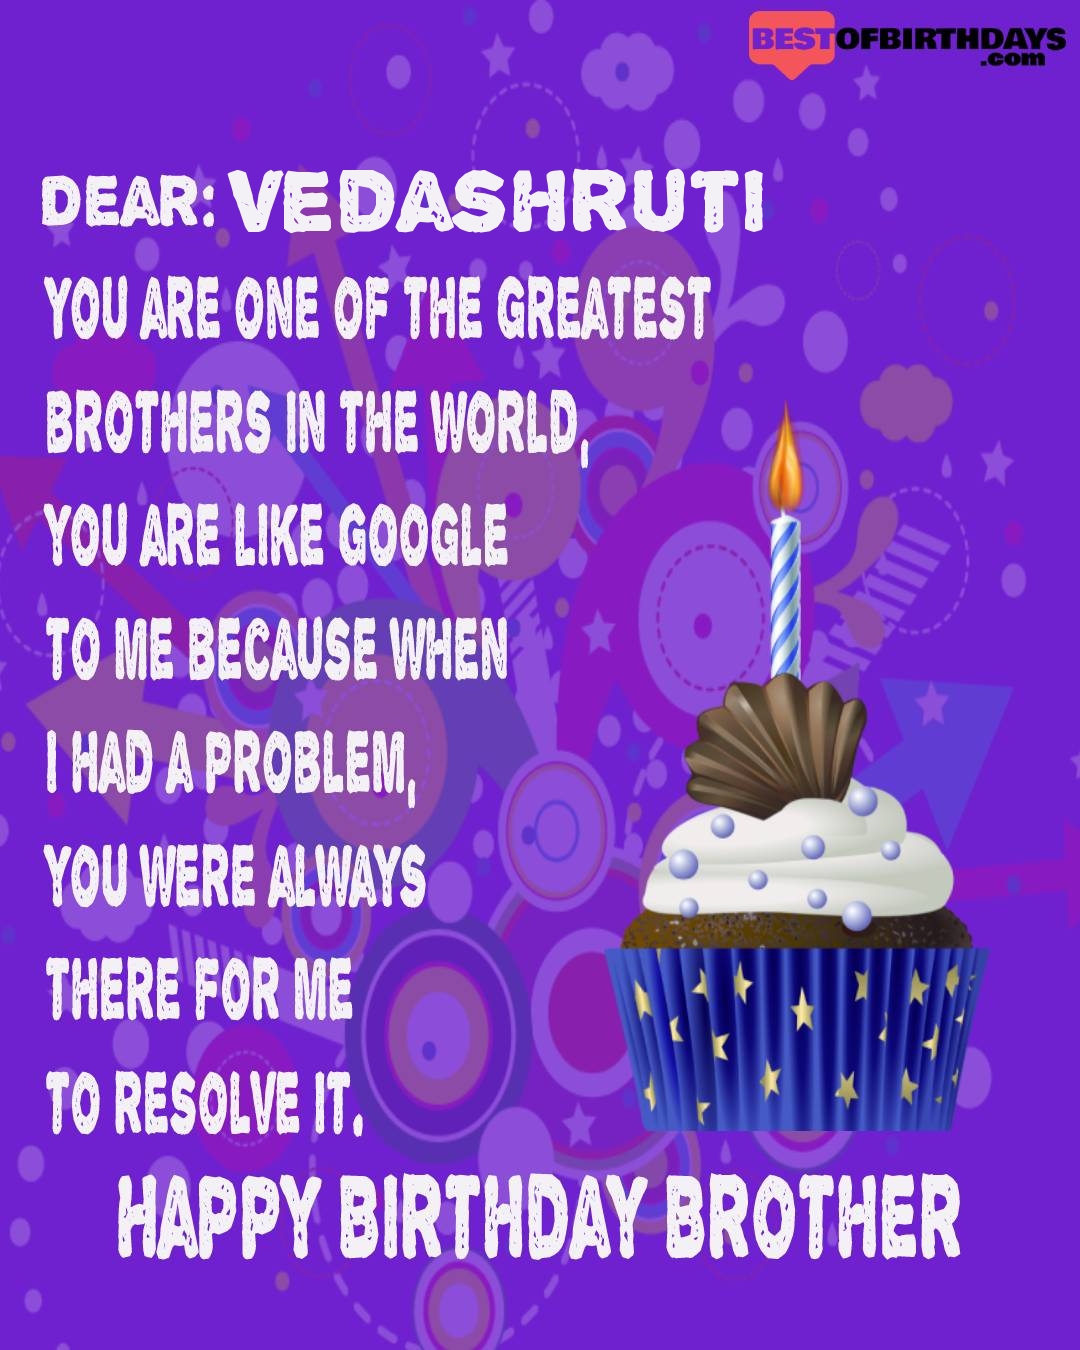 Happy birthday vedashruti bhai brother bro